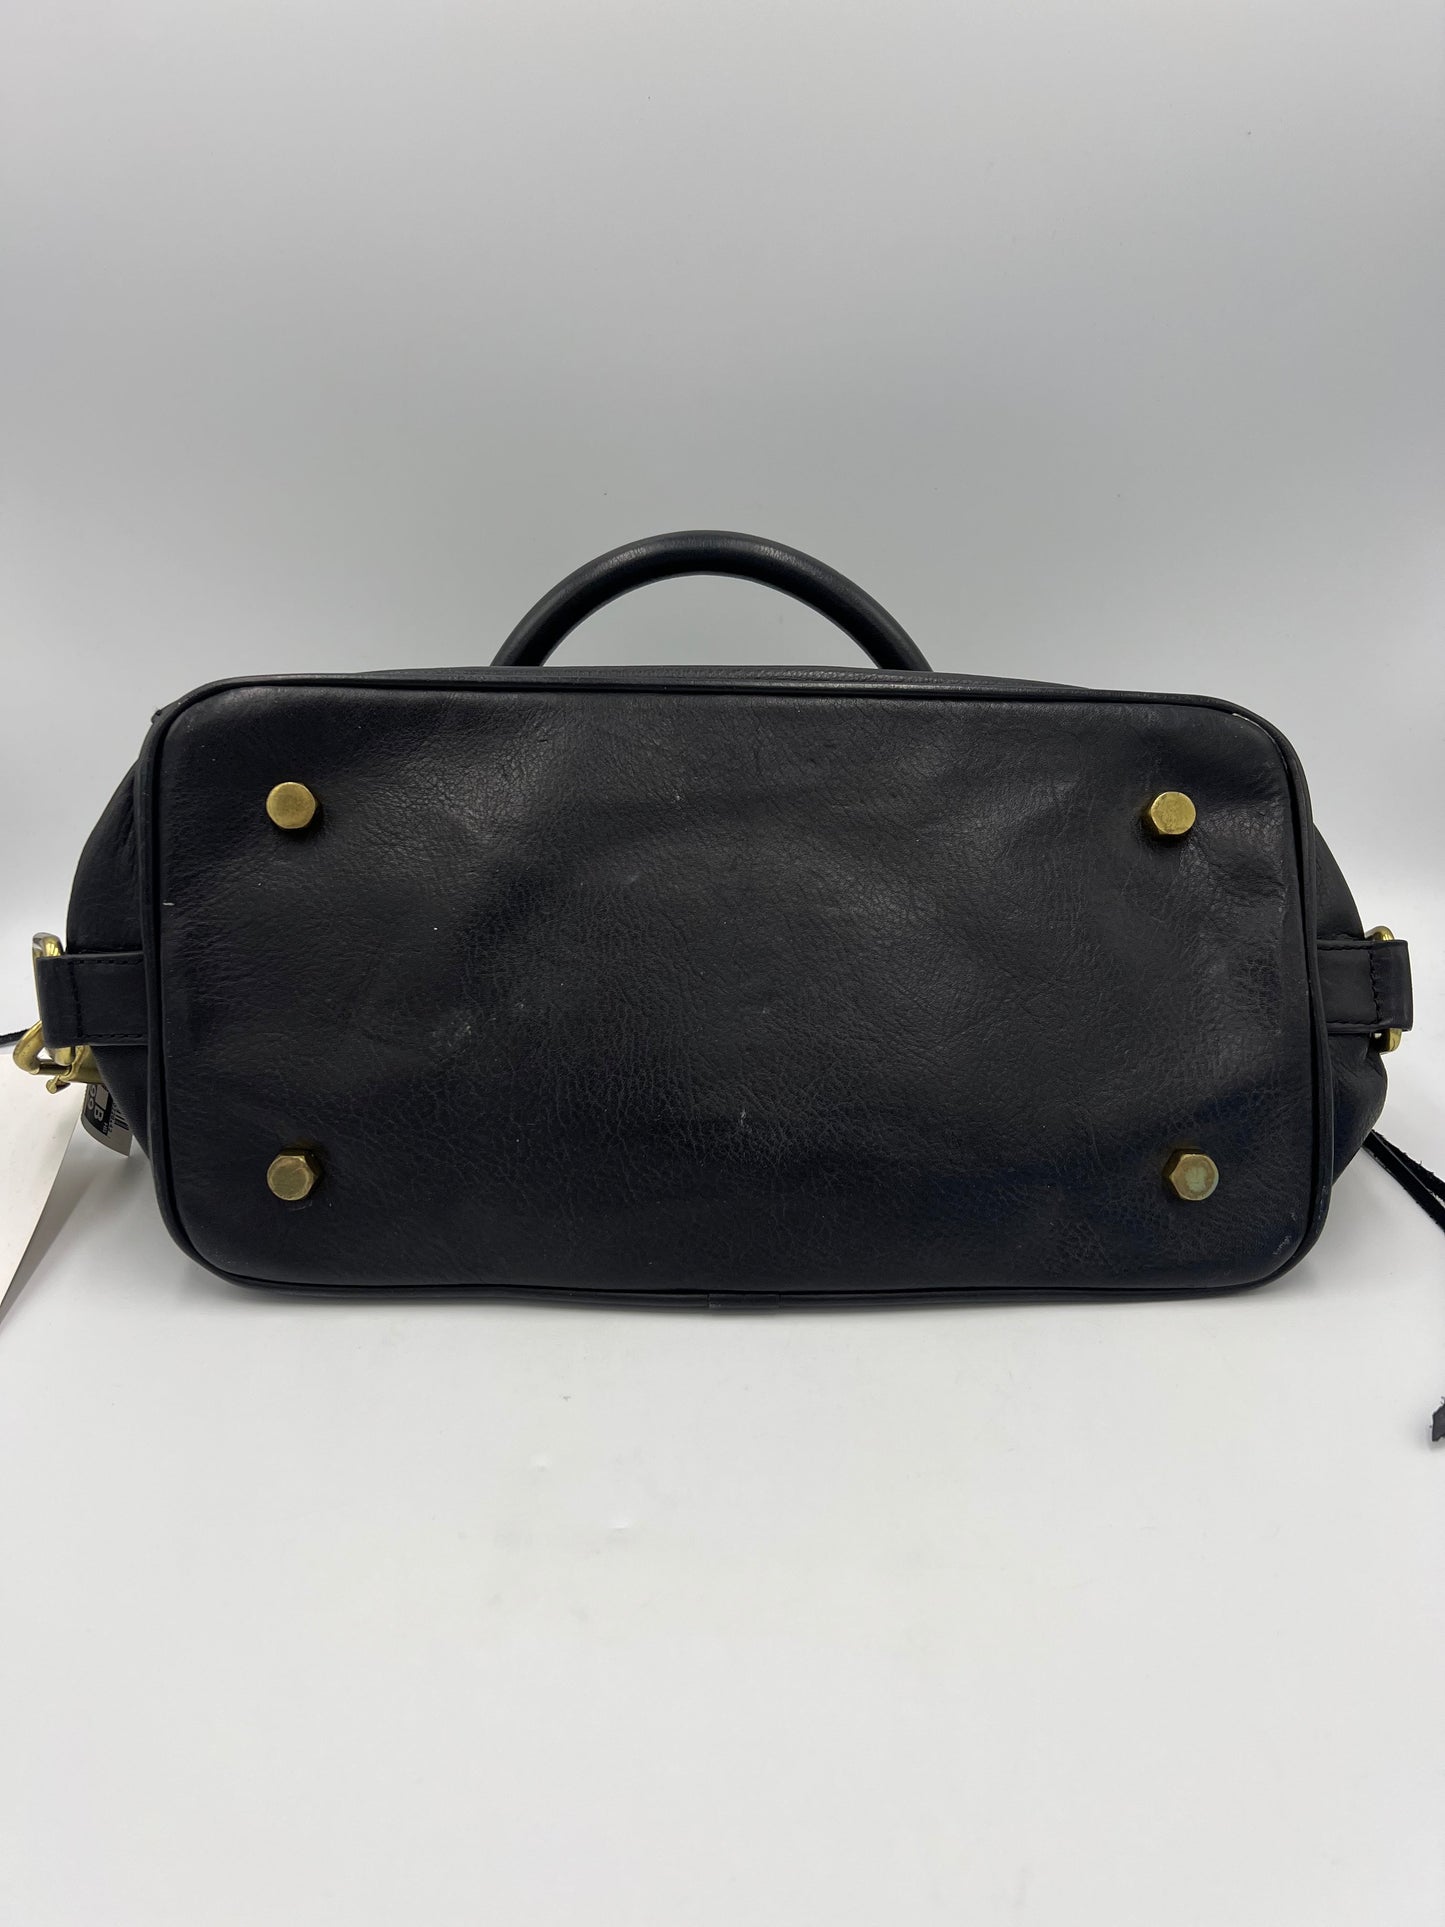 Handbag Designer By Rebecca Minkoff  Size: Medium